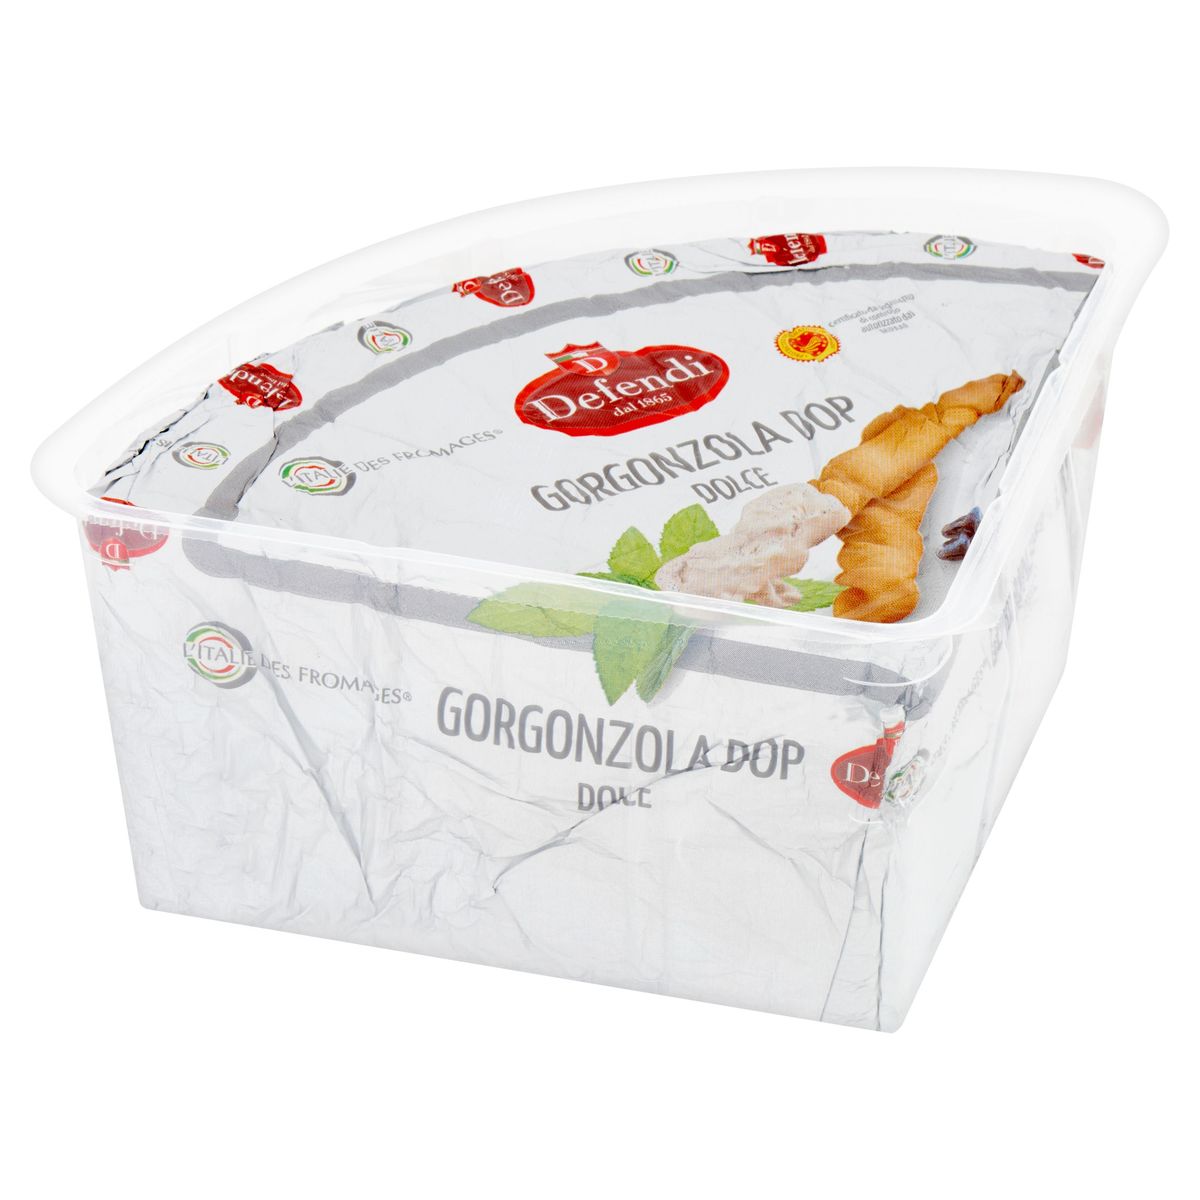 L'Italie des Fromages Defendi Gorgonzola DOP Dolce